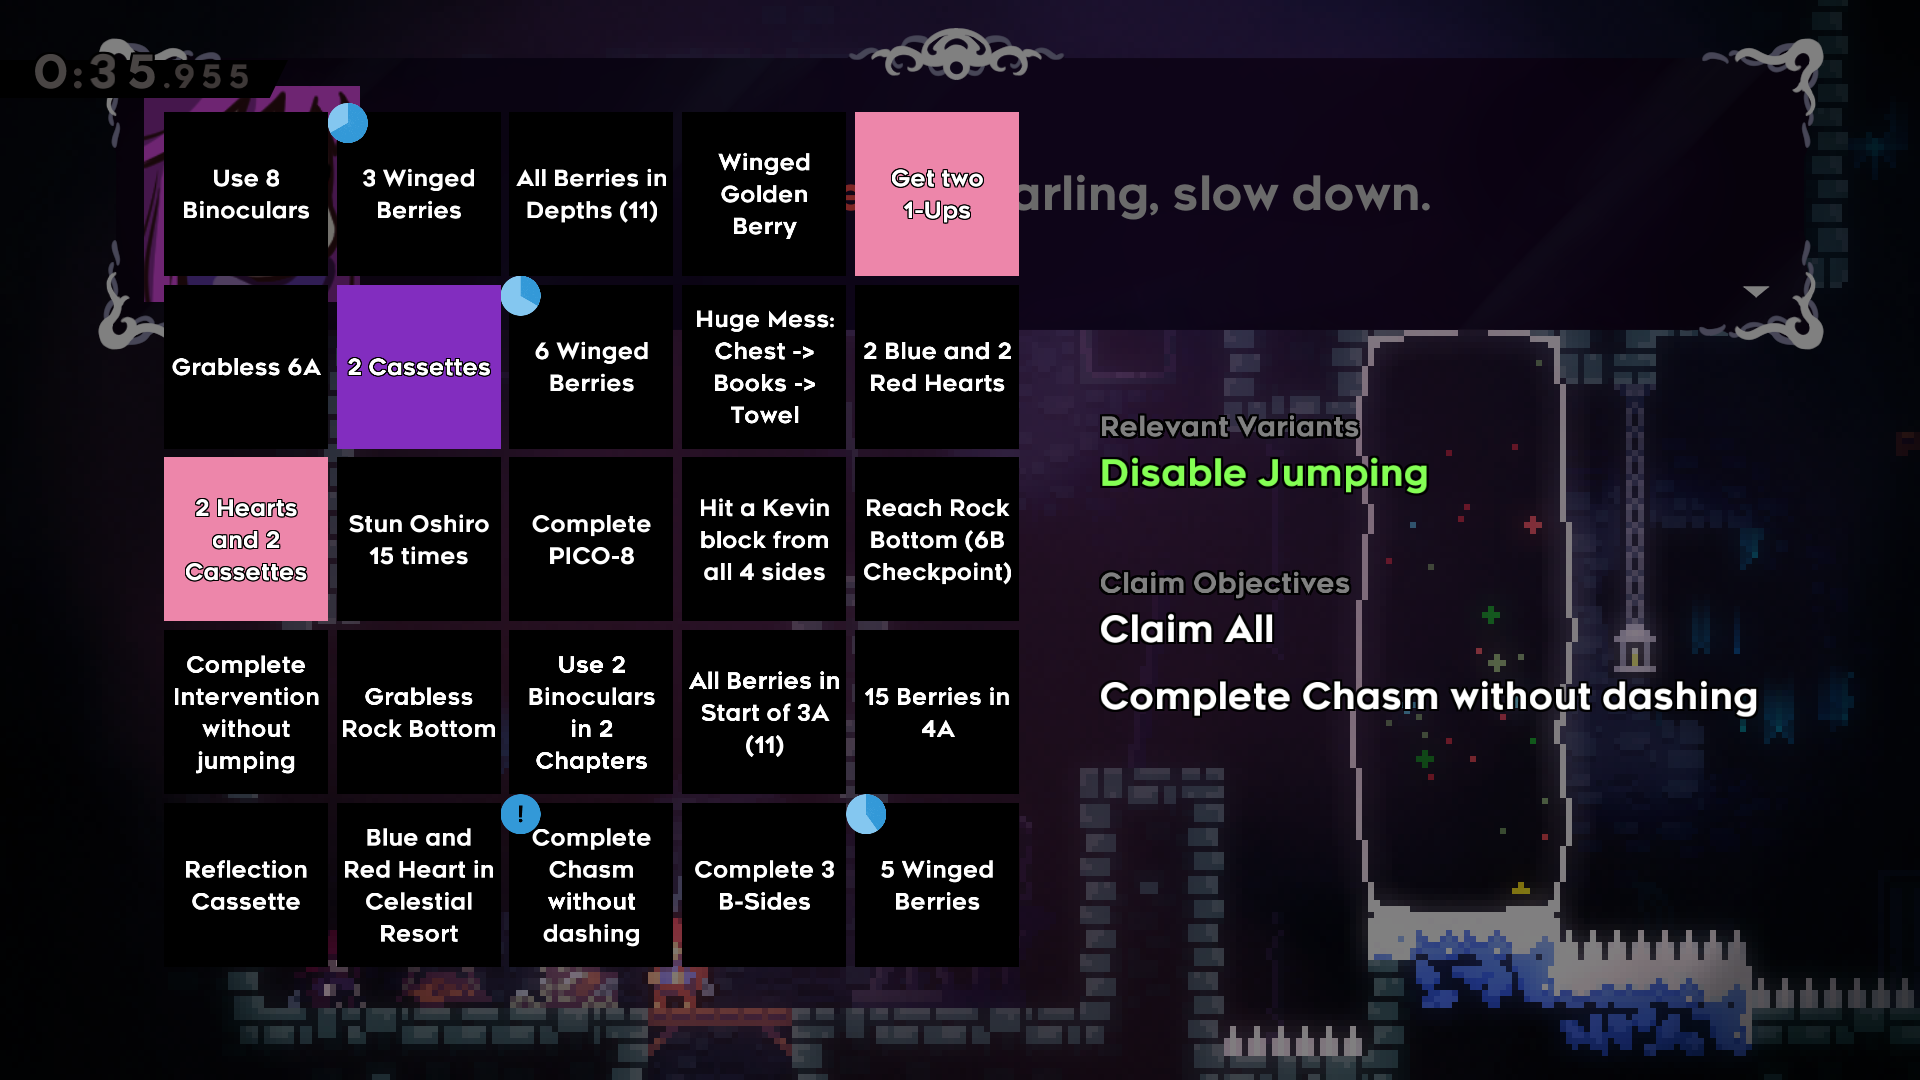 in-game screenshot of the bingo menu